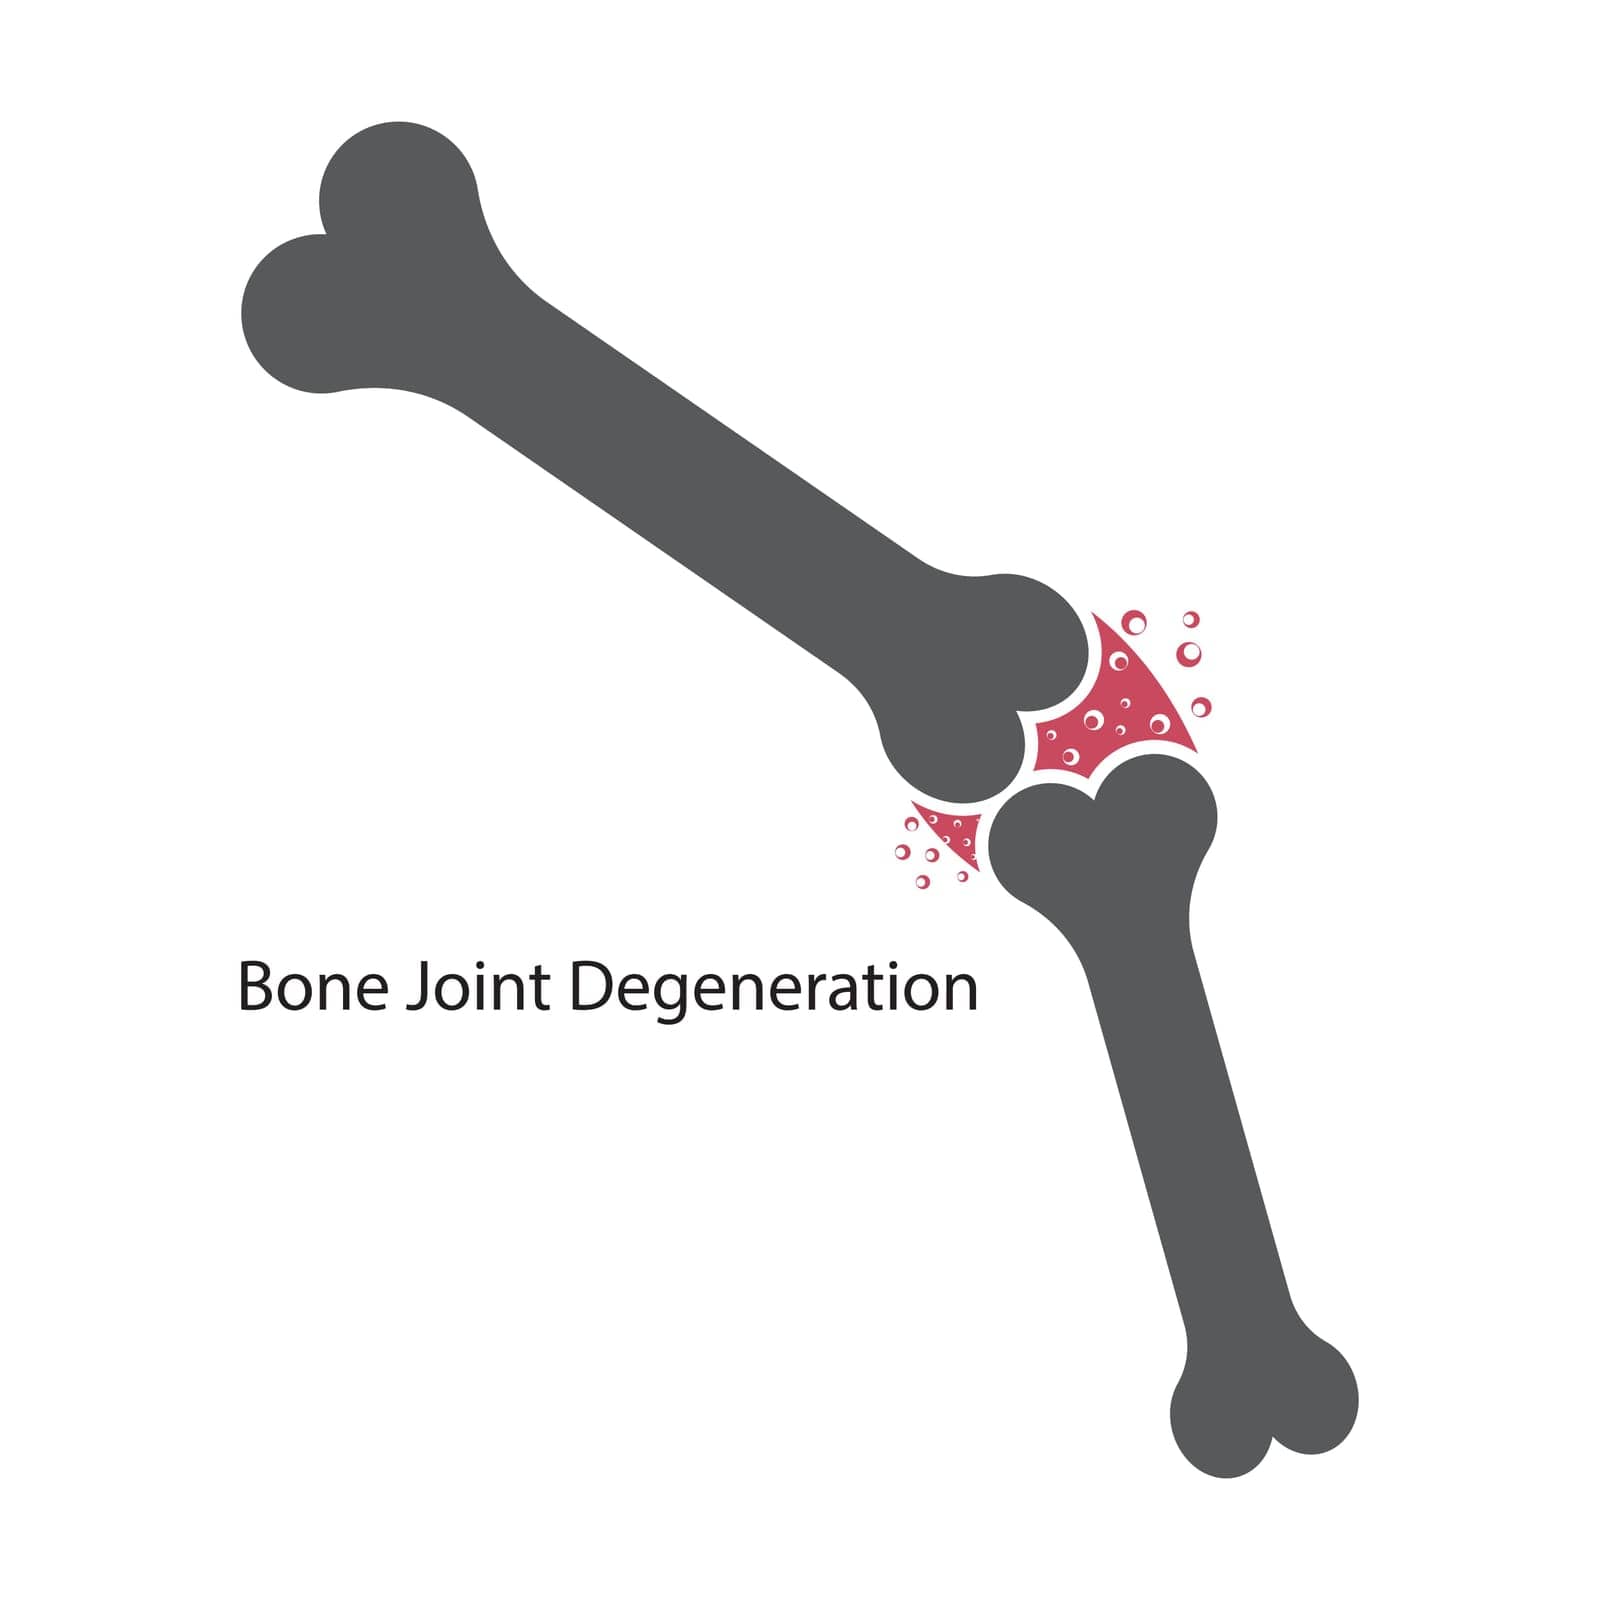 Bone joint degeneration icon by rnking